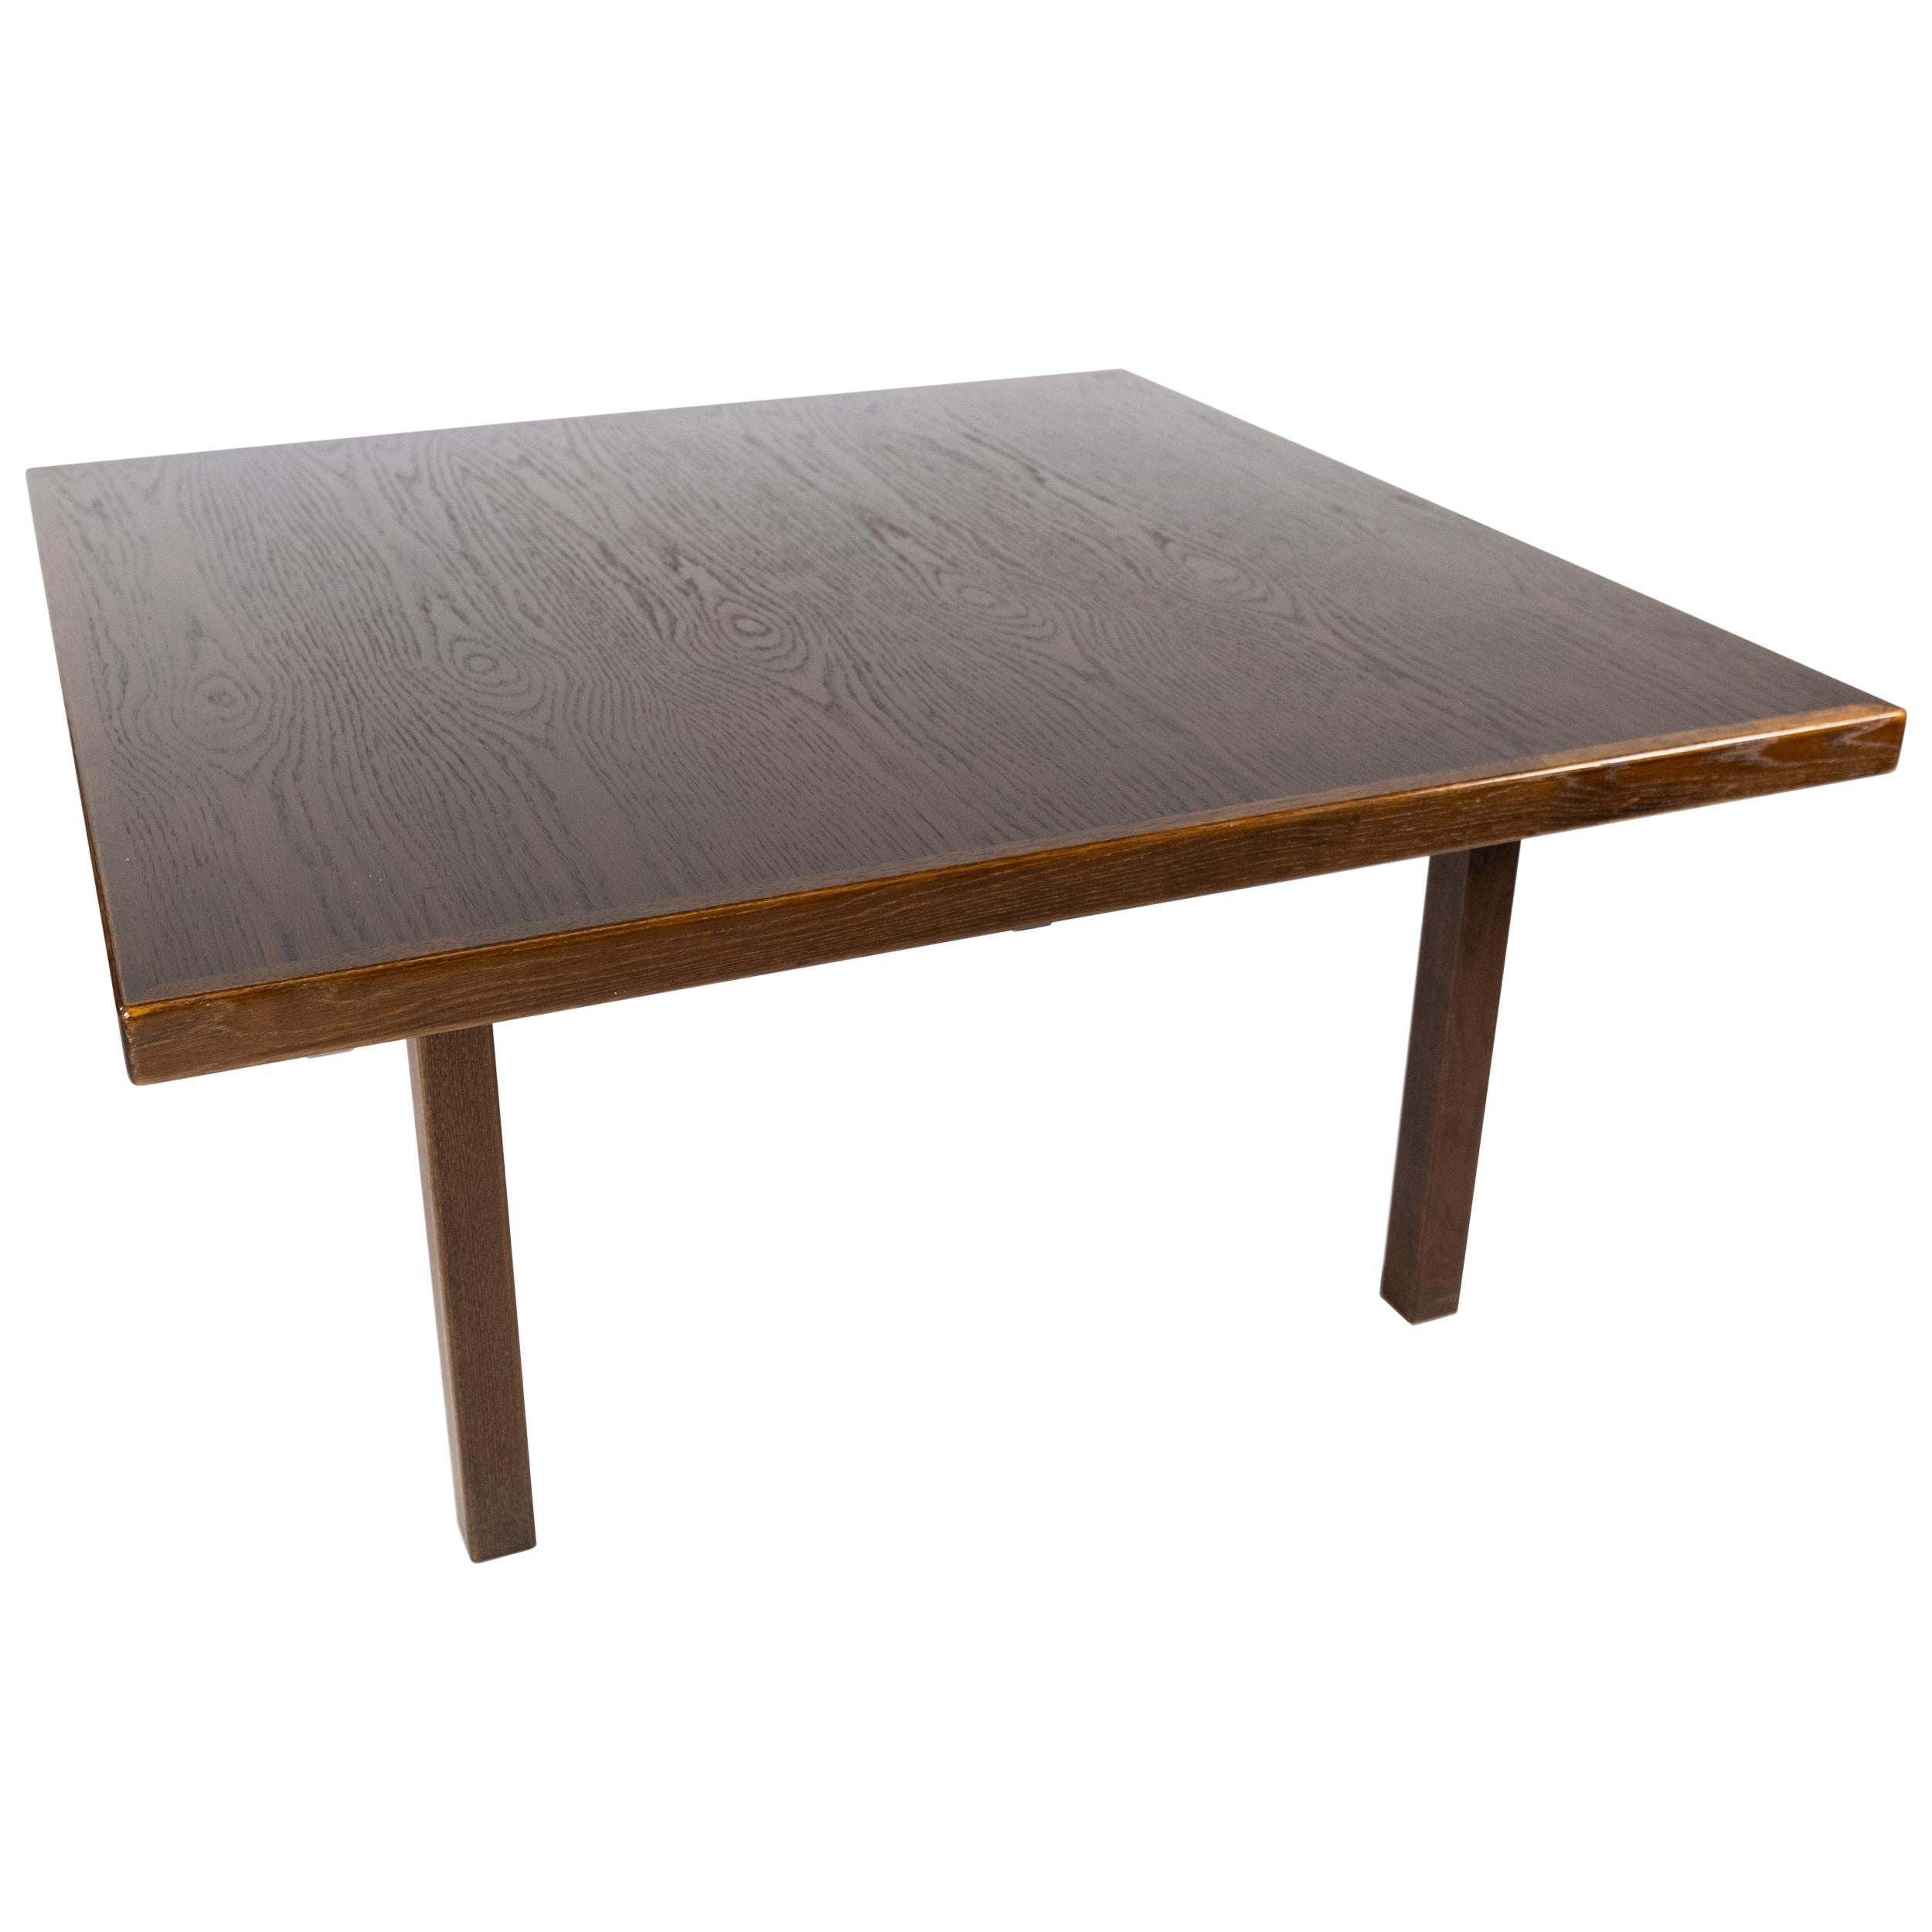 Coffee Table Made In Dark Oak, Danish Design From 1960s